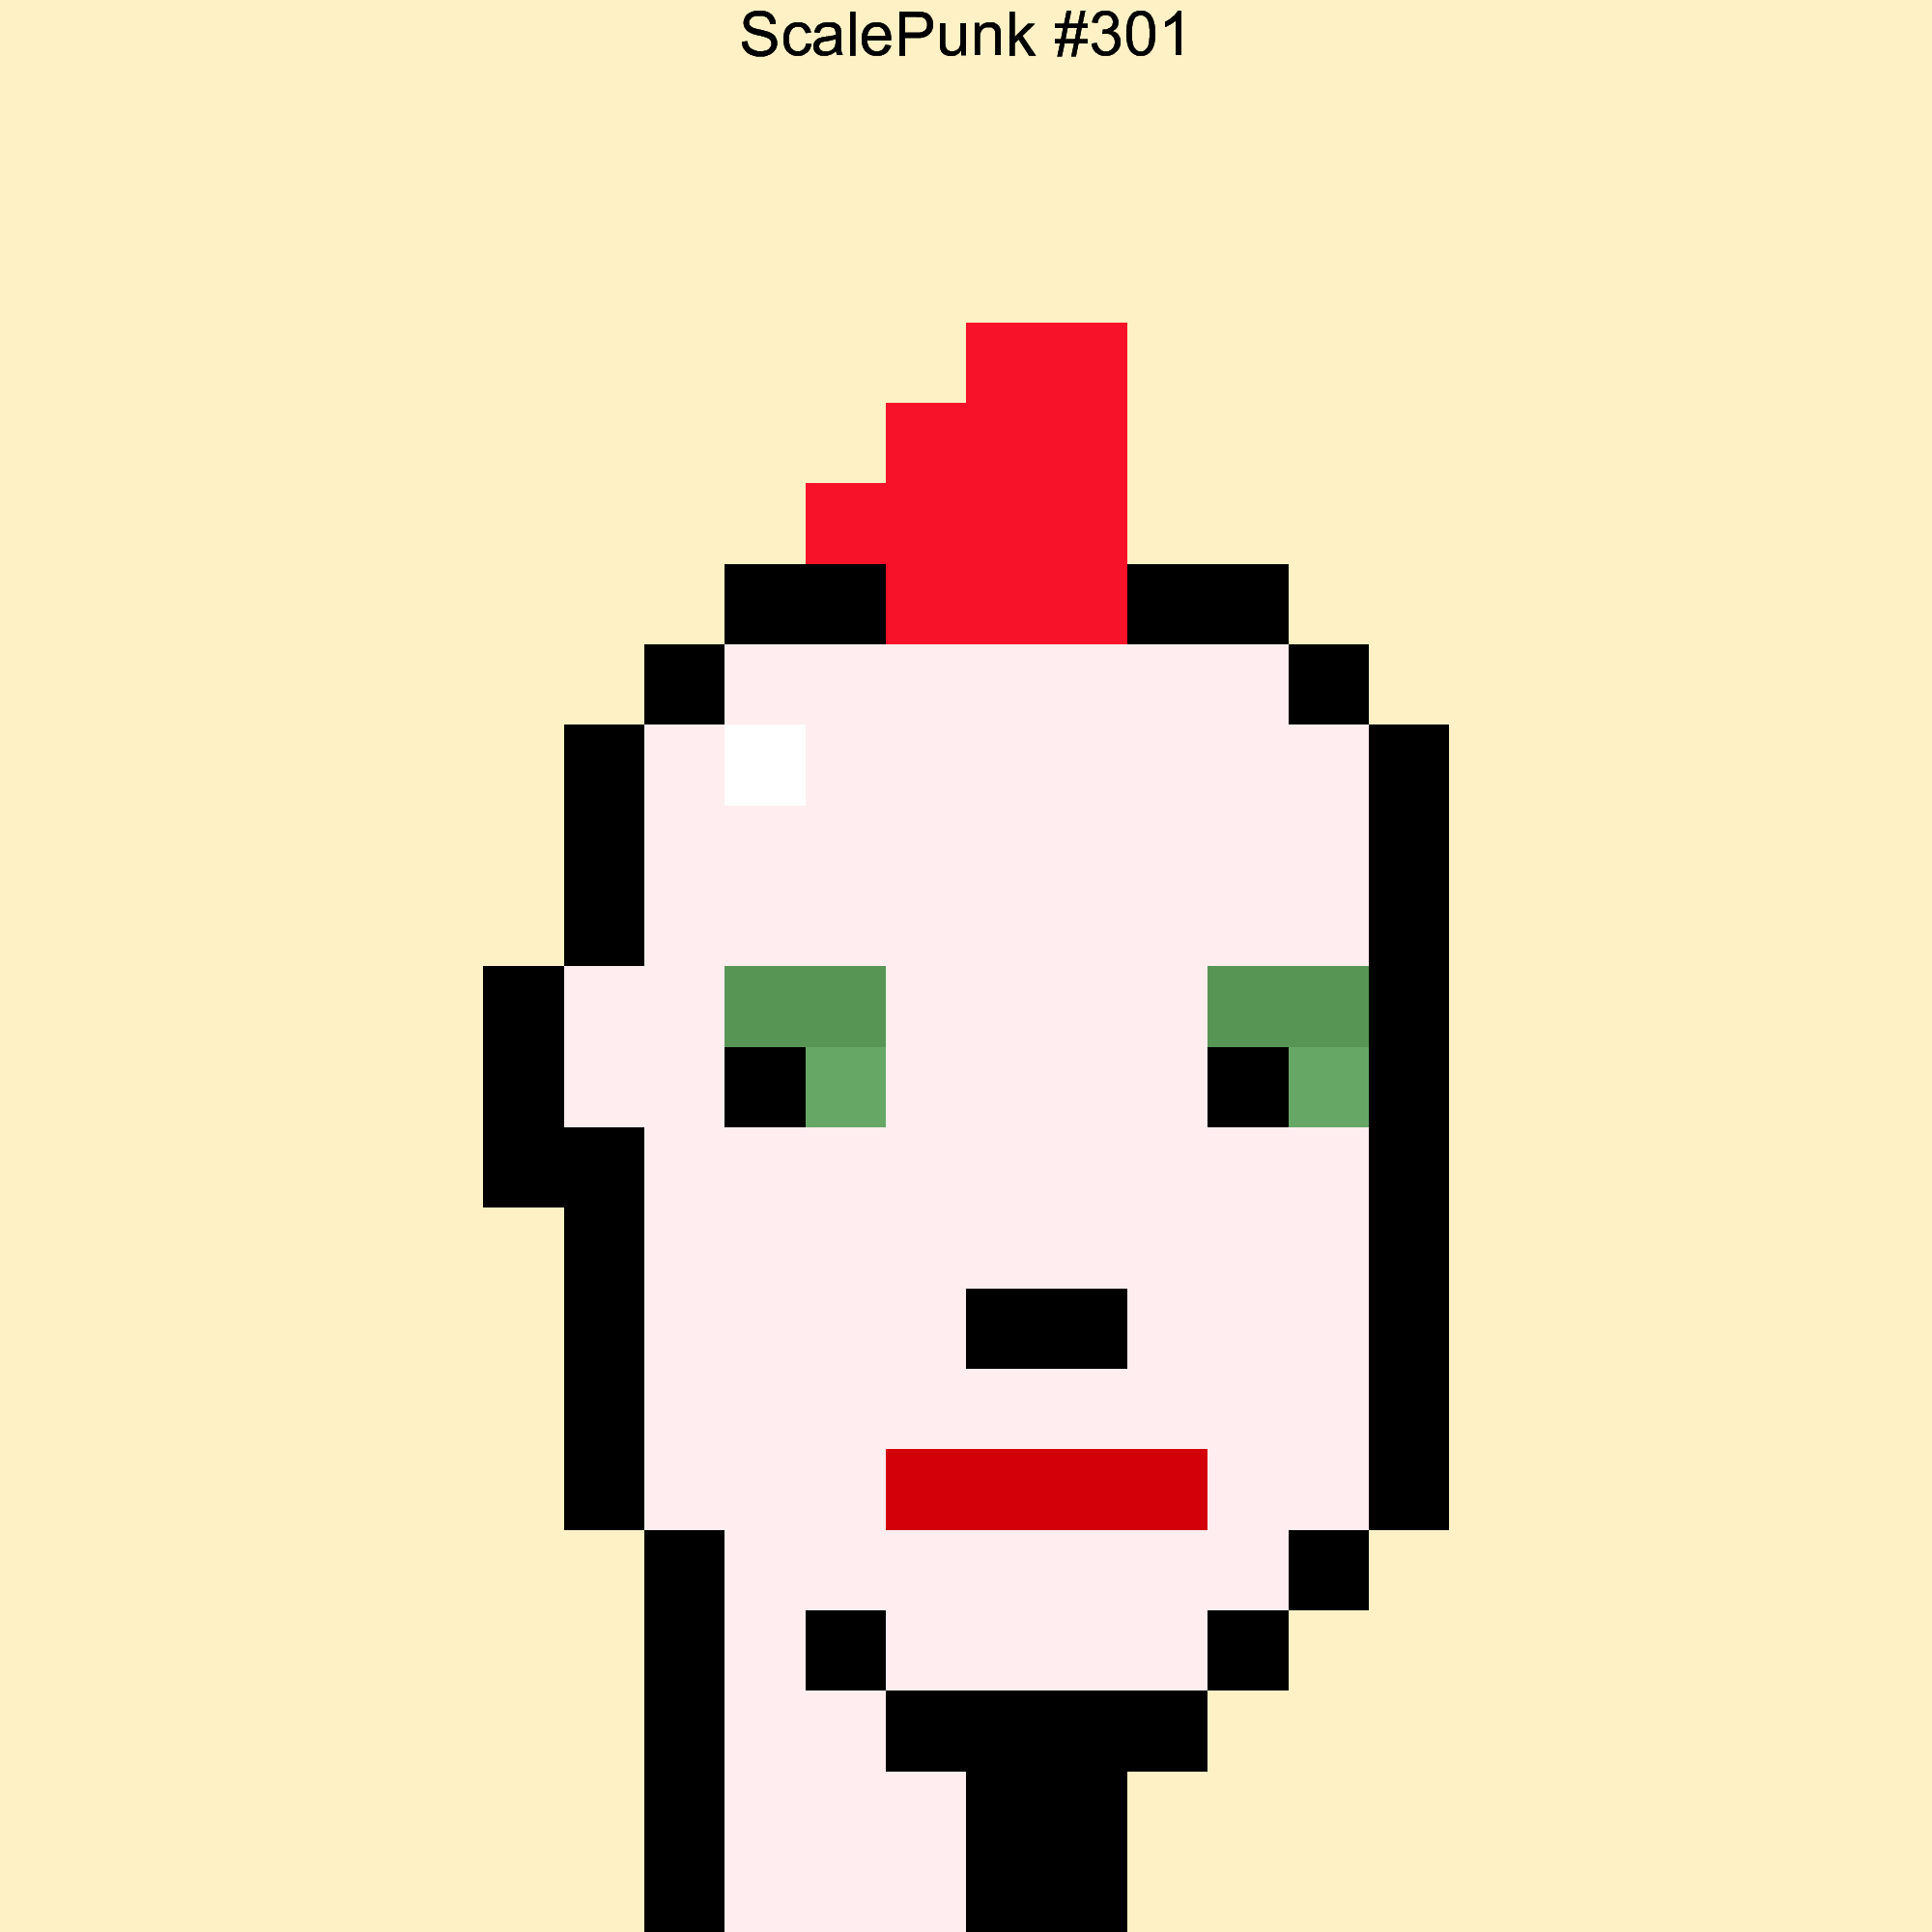 Punk 301